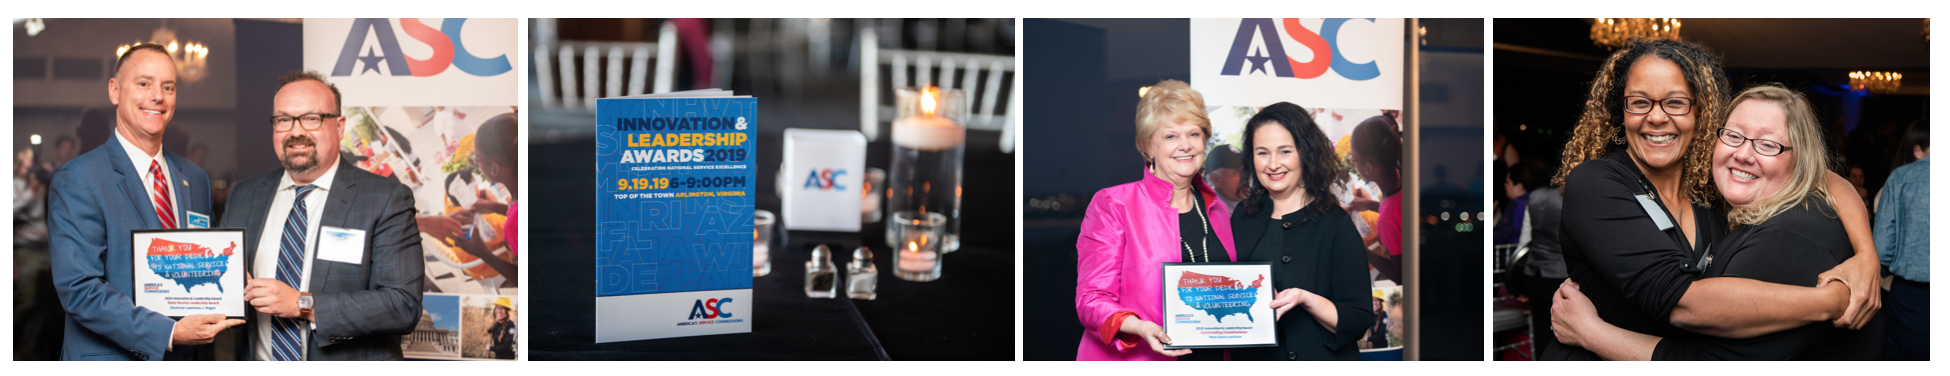 four photos from previous ASC receptions